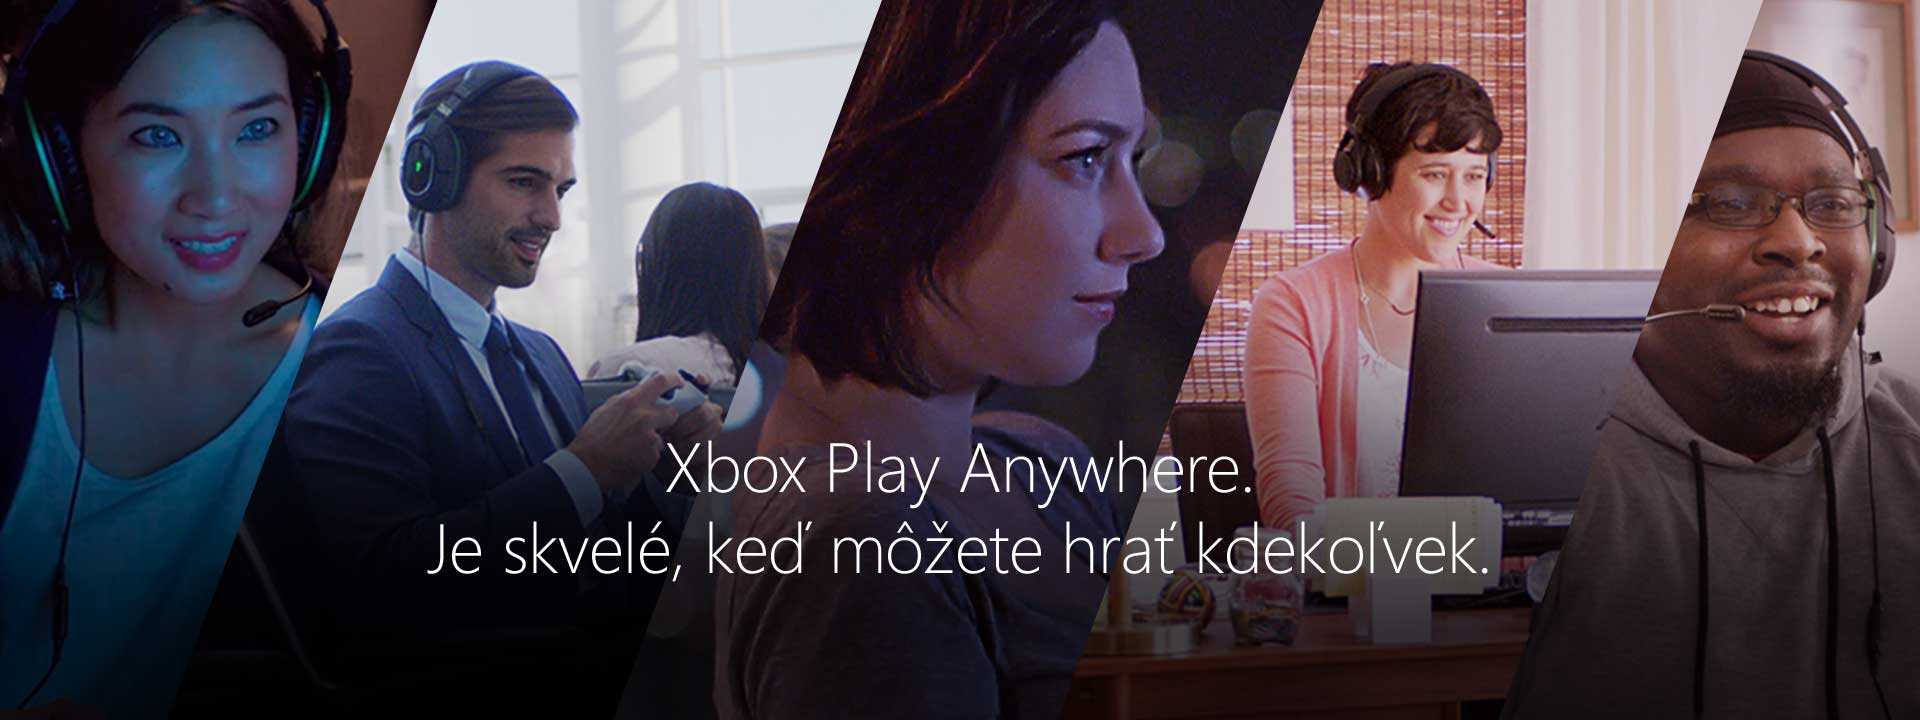 Xbox Play Anywhere. Je skvele, ked mozete hrat kdekolvek.